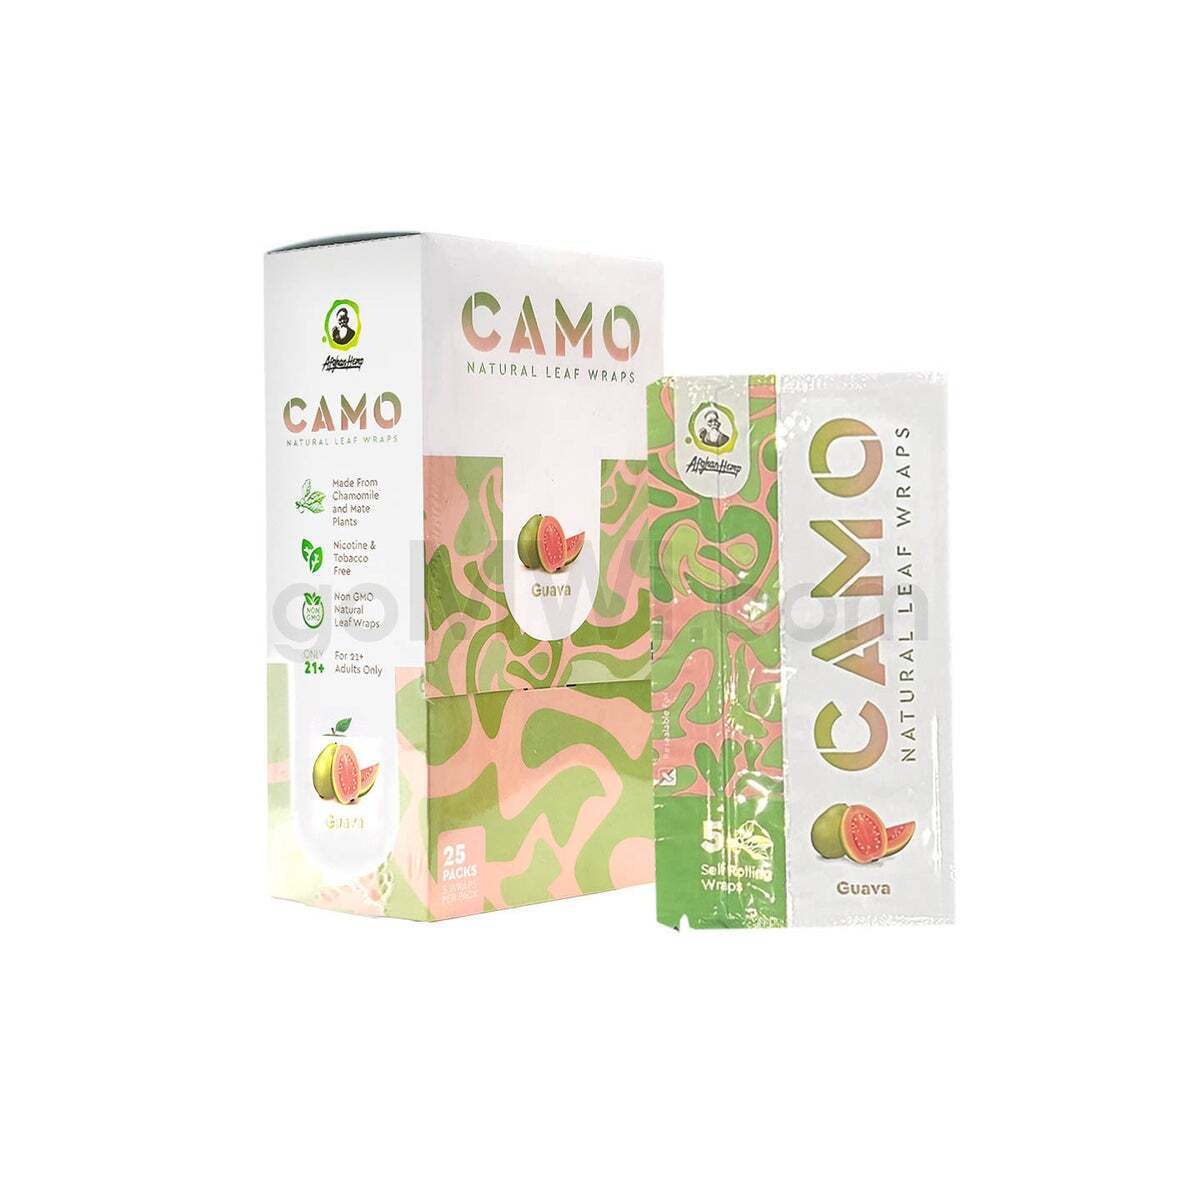 CAMO Self-Rolling Wrap 125 wraps -  Guava Full box- FAST SHIPPING